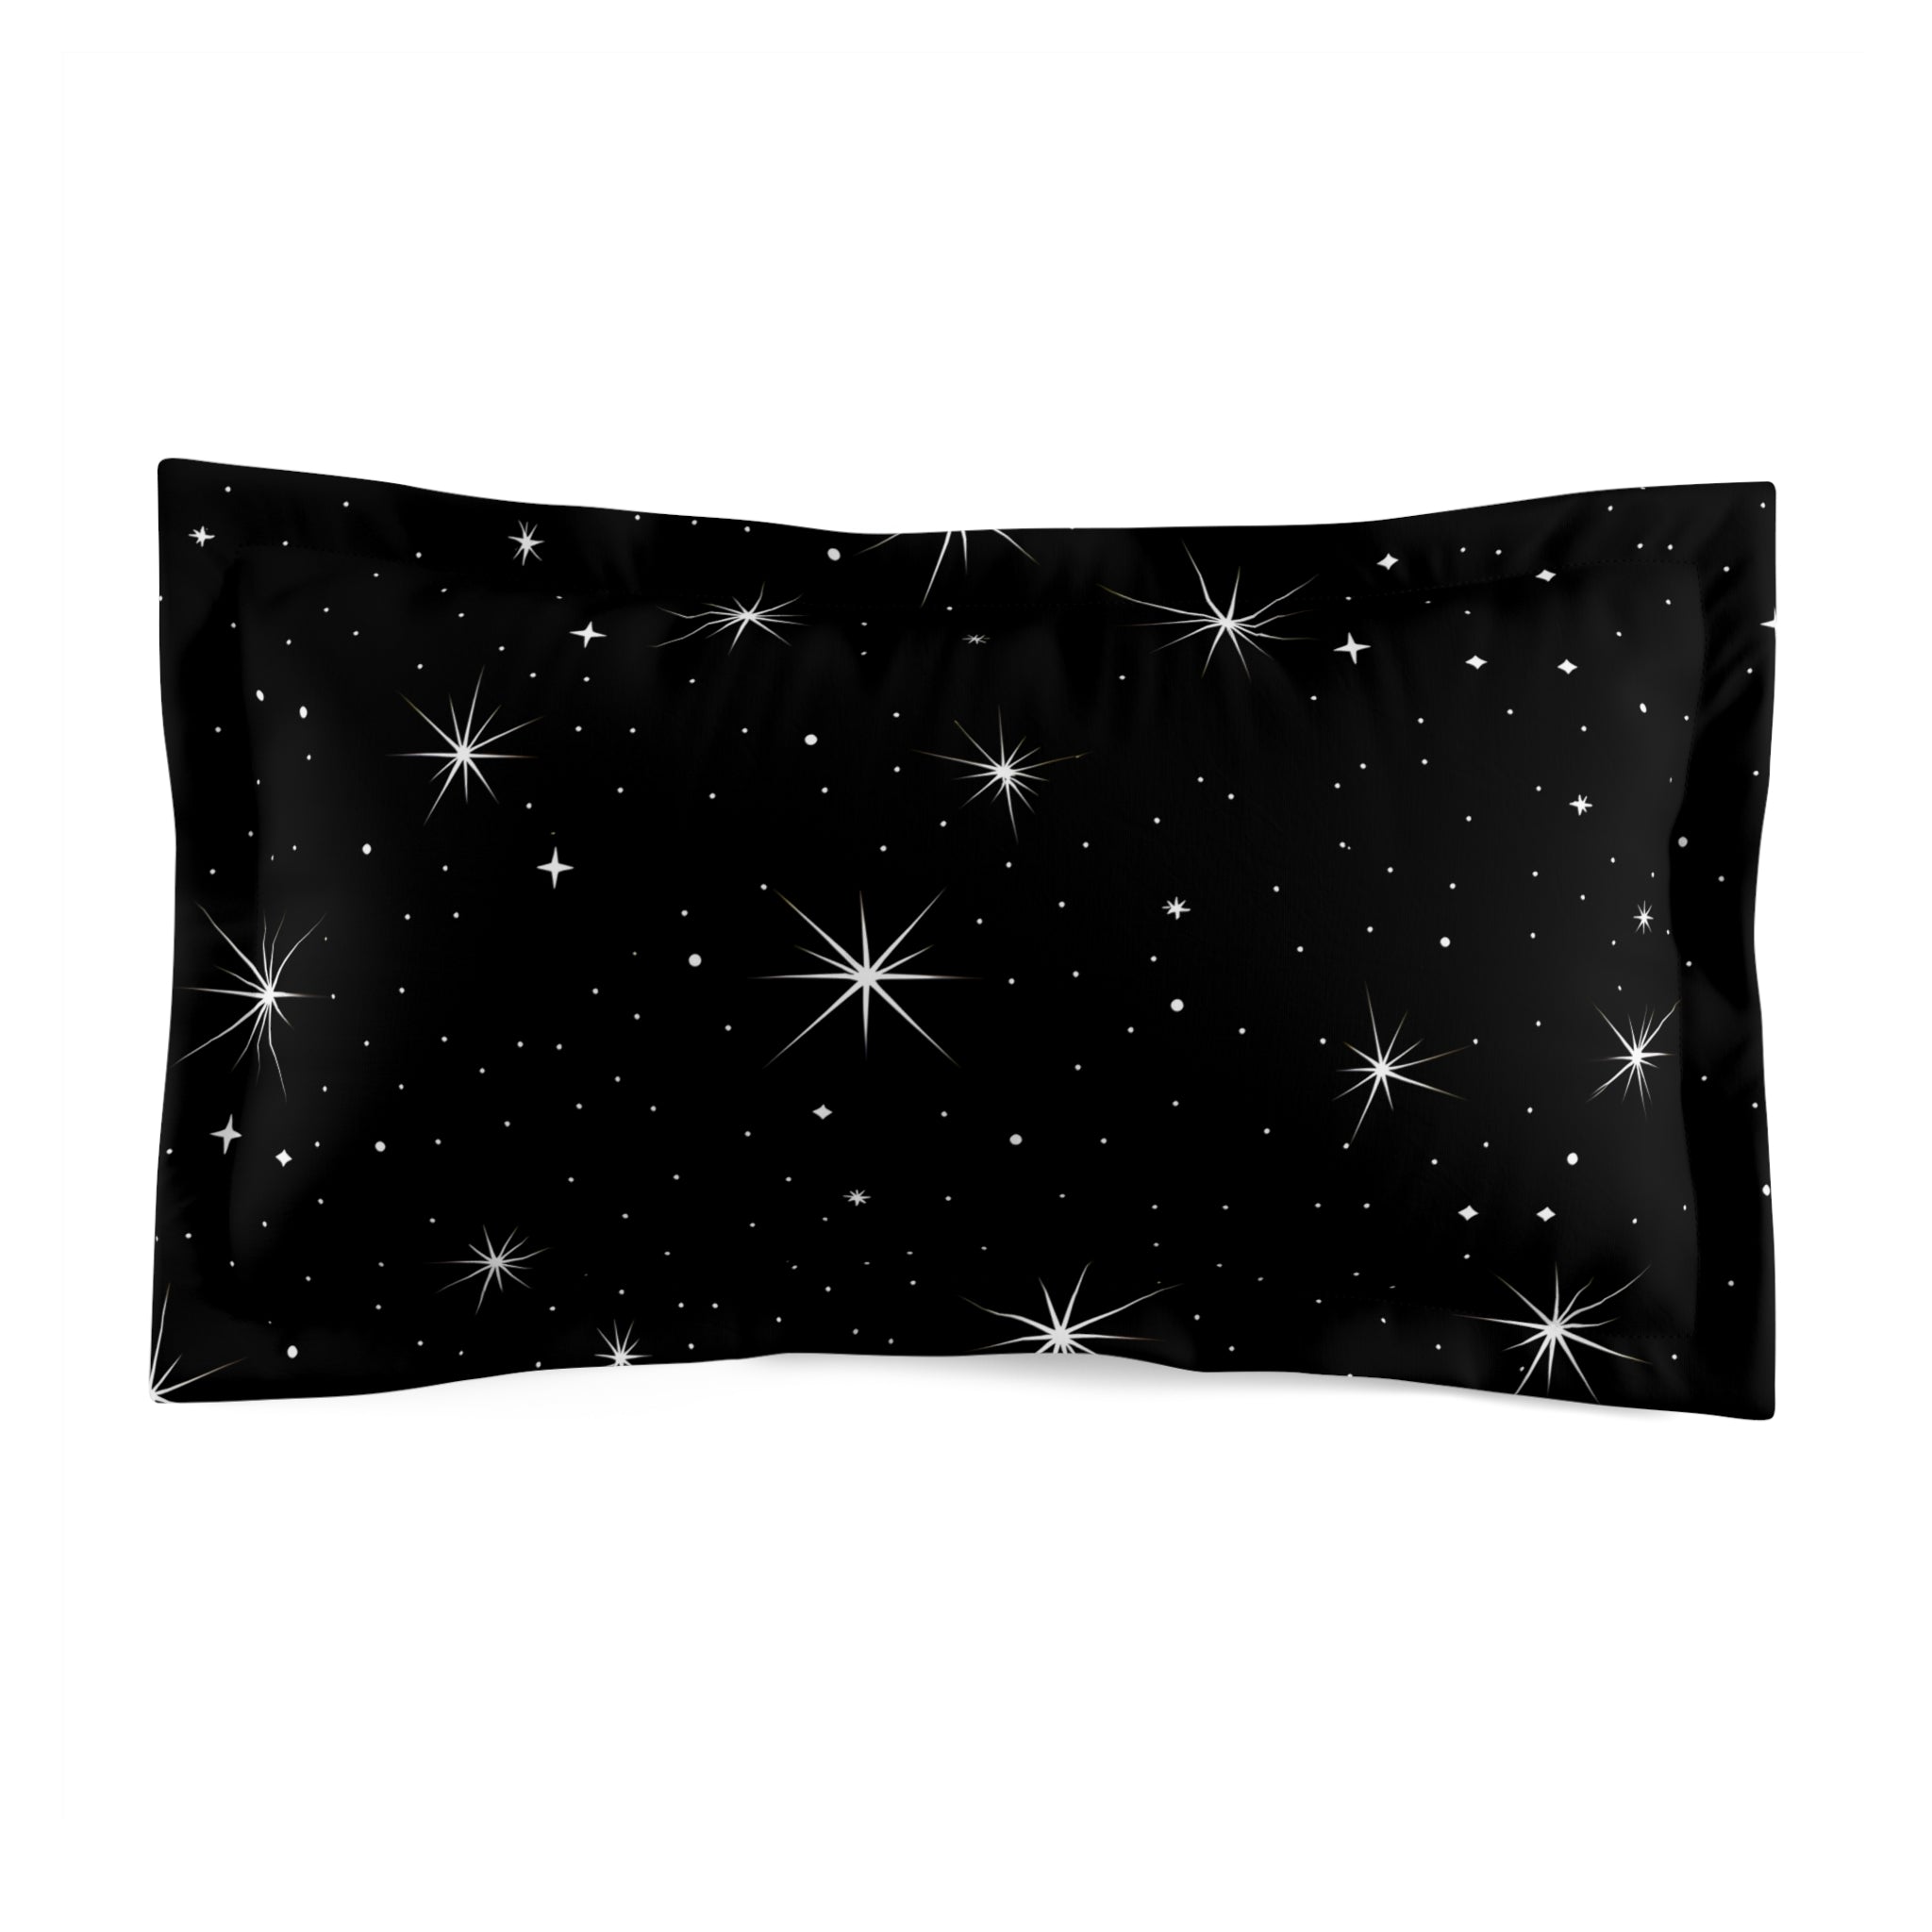 Starry Night Sky Duvet Cover: Black Microfiber